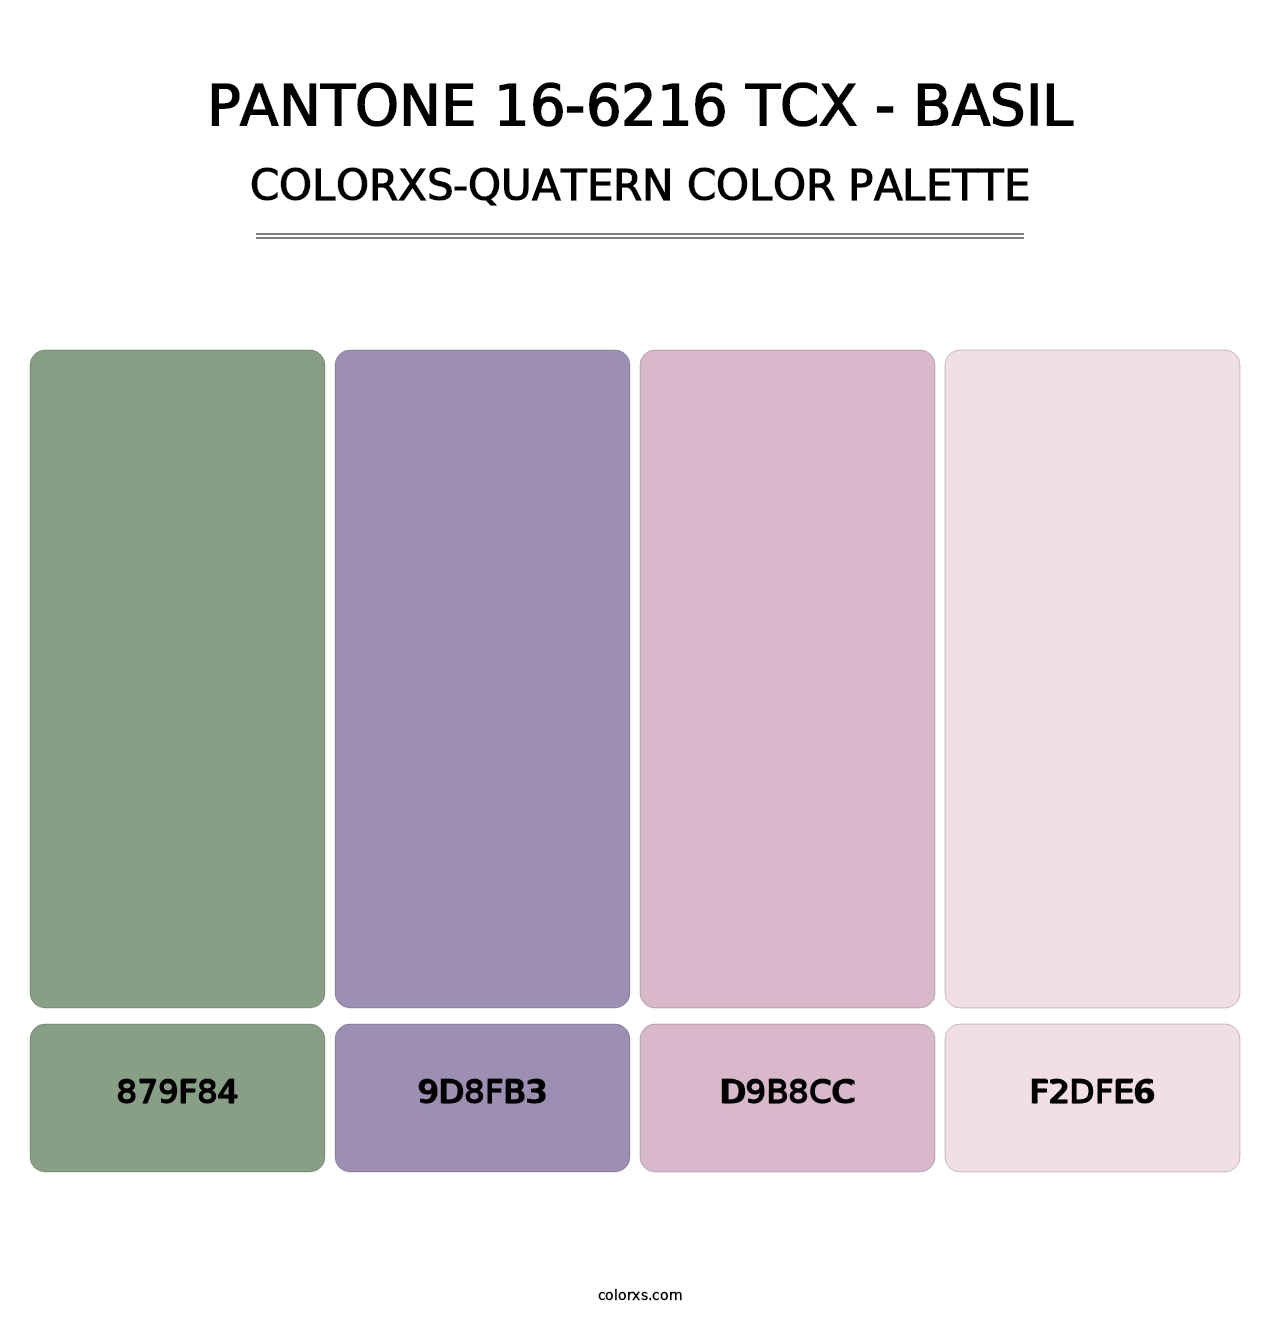 PANTONE 16-6216 TCX - Basil - Colorxs Quatern Palette